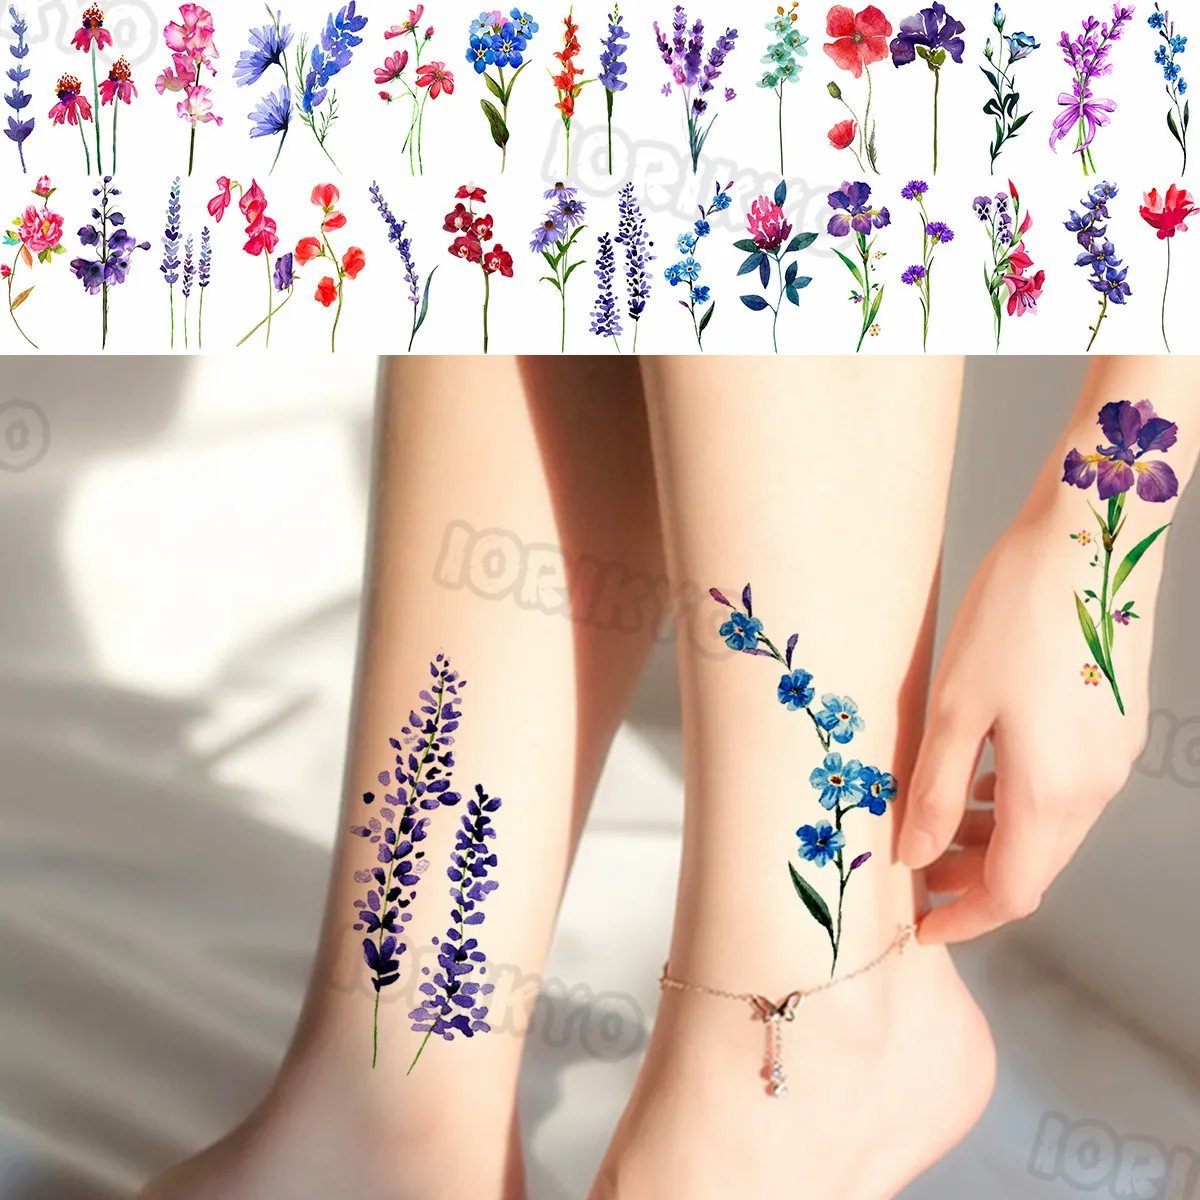 

Watercolor Lavender Small Temporary Tattoos For Women Girls Realistic Plum Blossom Lily Fake Tattoo Sticker Leg Body Tatoos Show